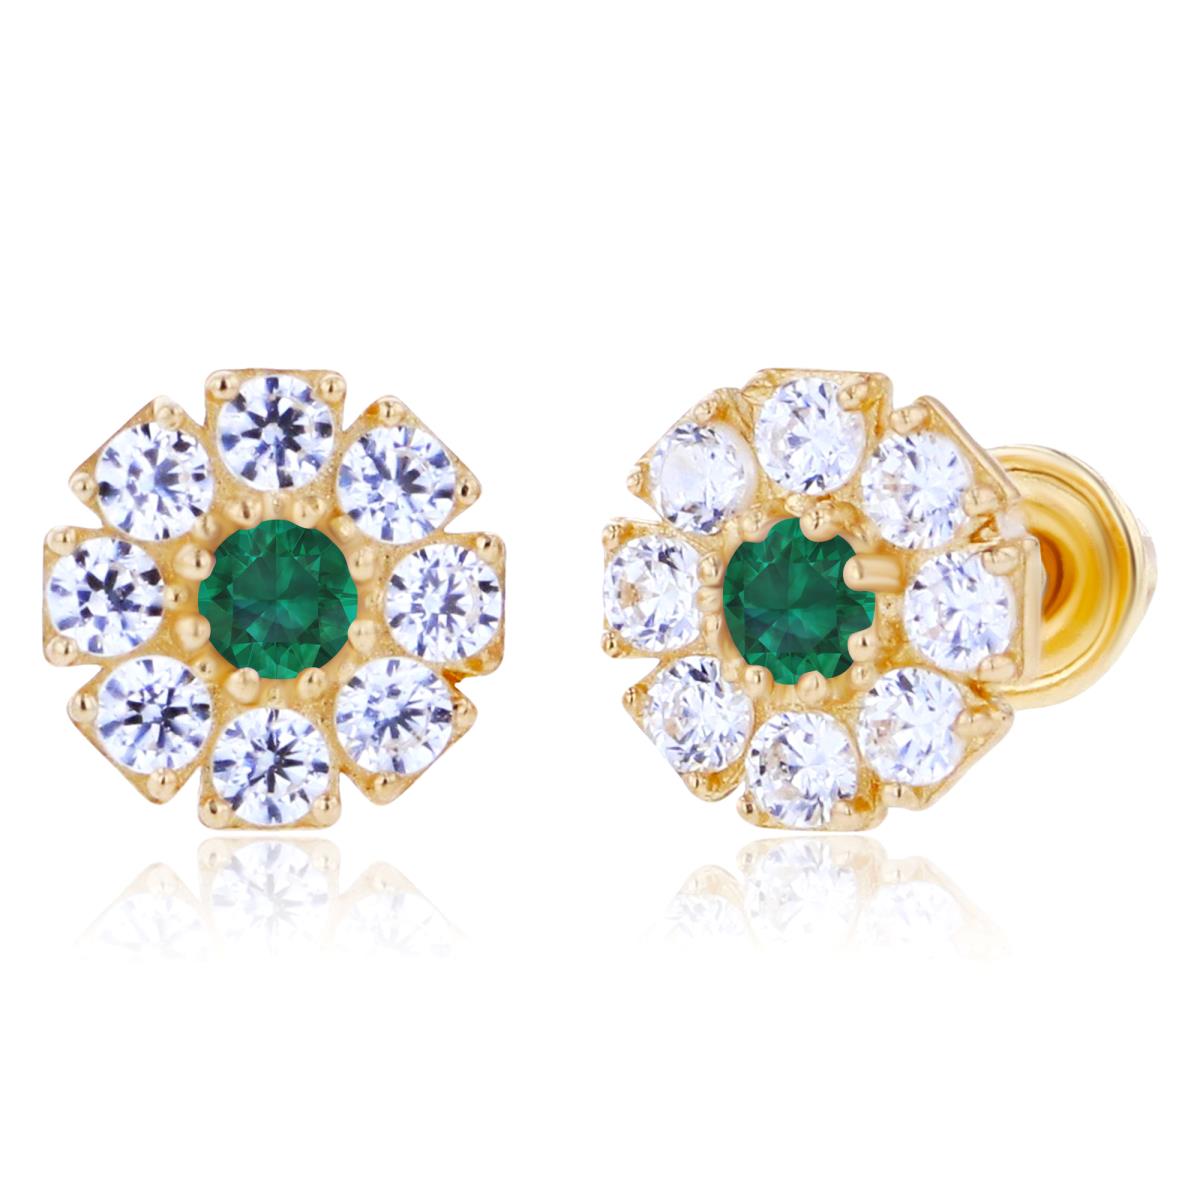 14K Yellow Gold 2mm Round Created Emerald & 1.5mm Created White Sapphire Flower Screwback Earrings